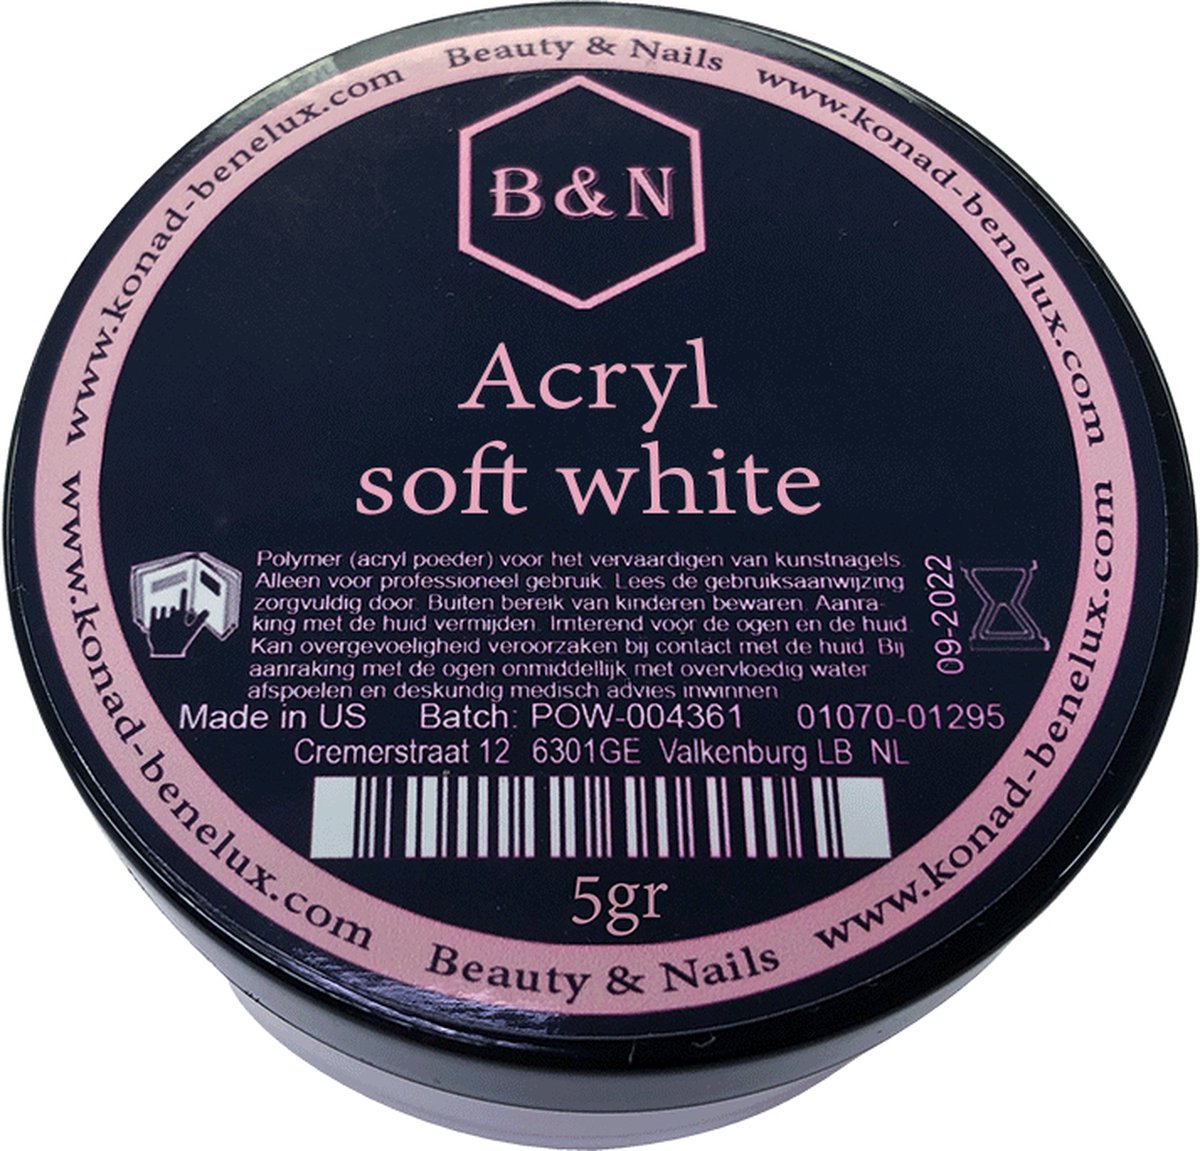 Acryl - soft white - 5 gr | B&N - acrylpoeder - VEGAN - acrylpoeder